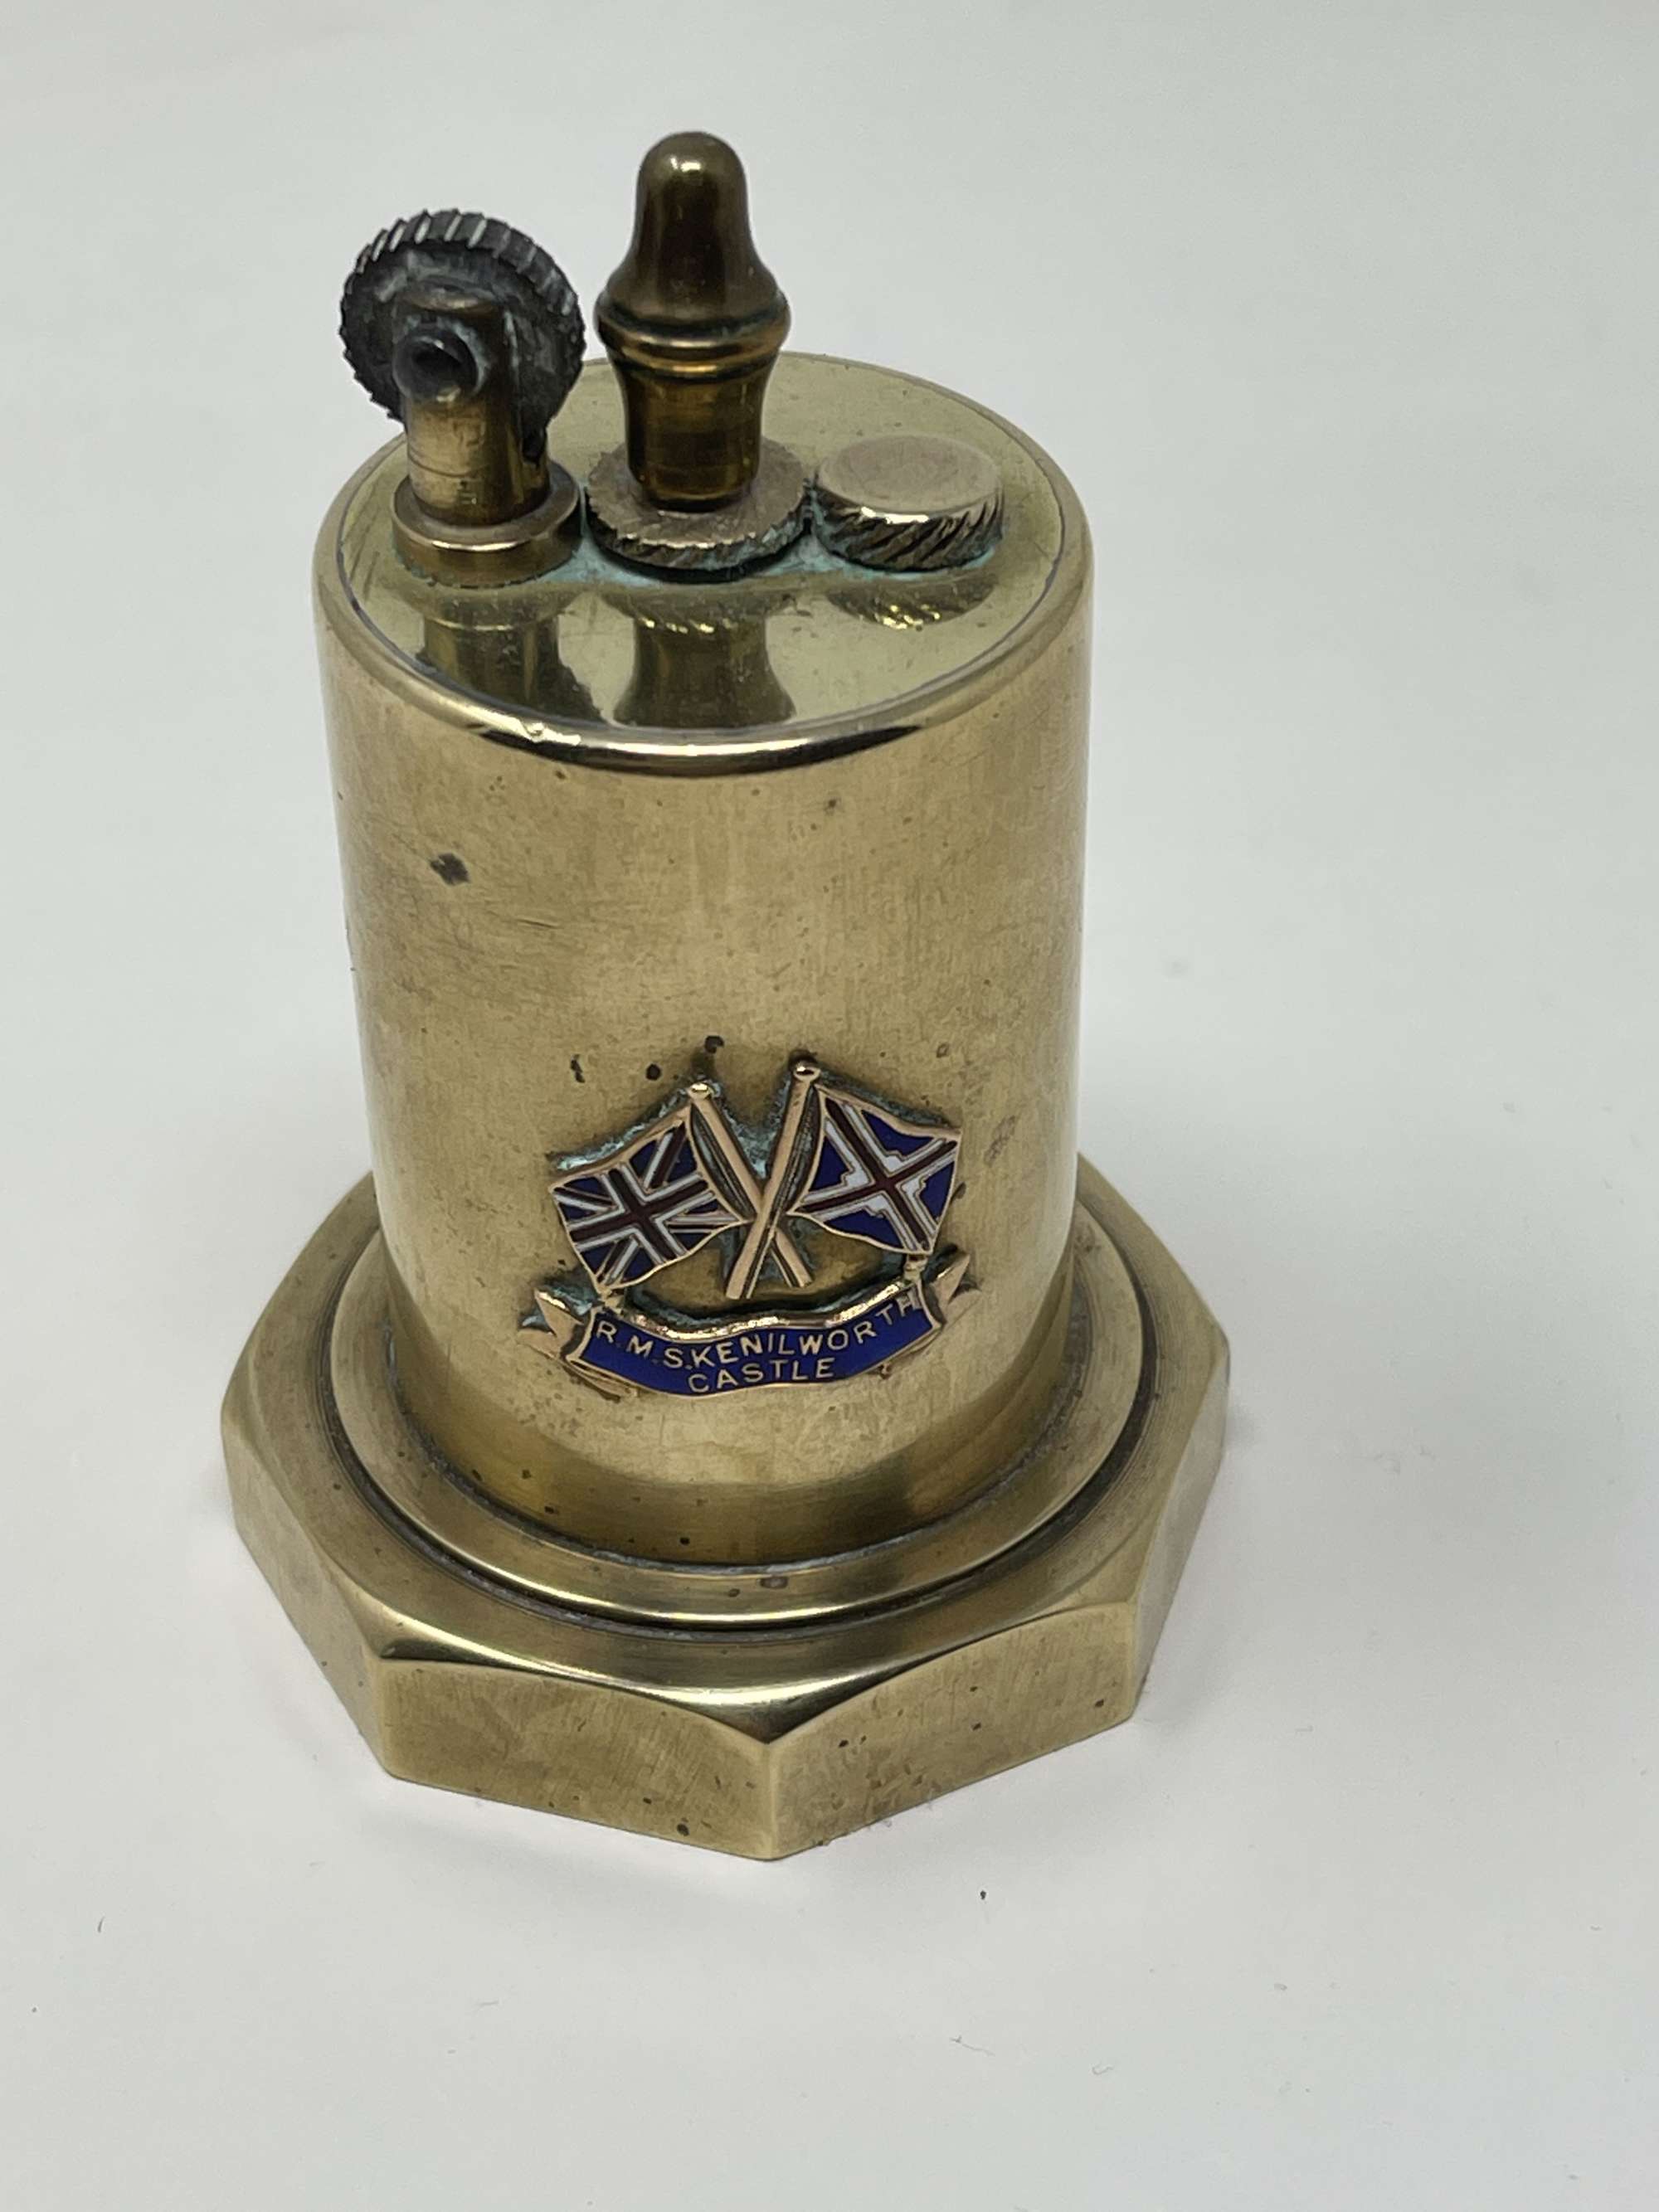 RMS Skenilworth Castle Brass Lighter